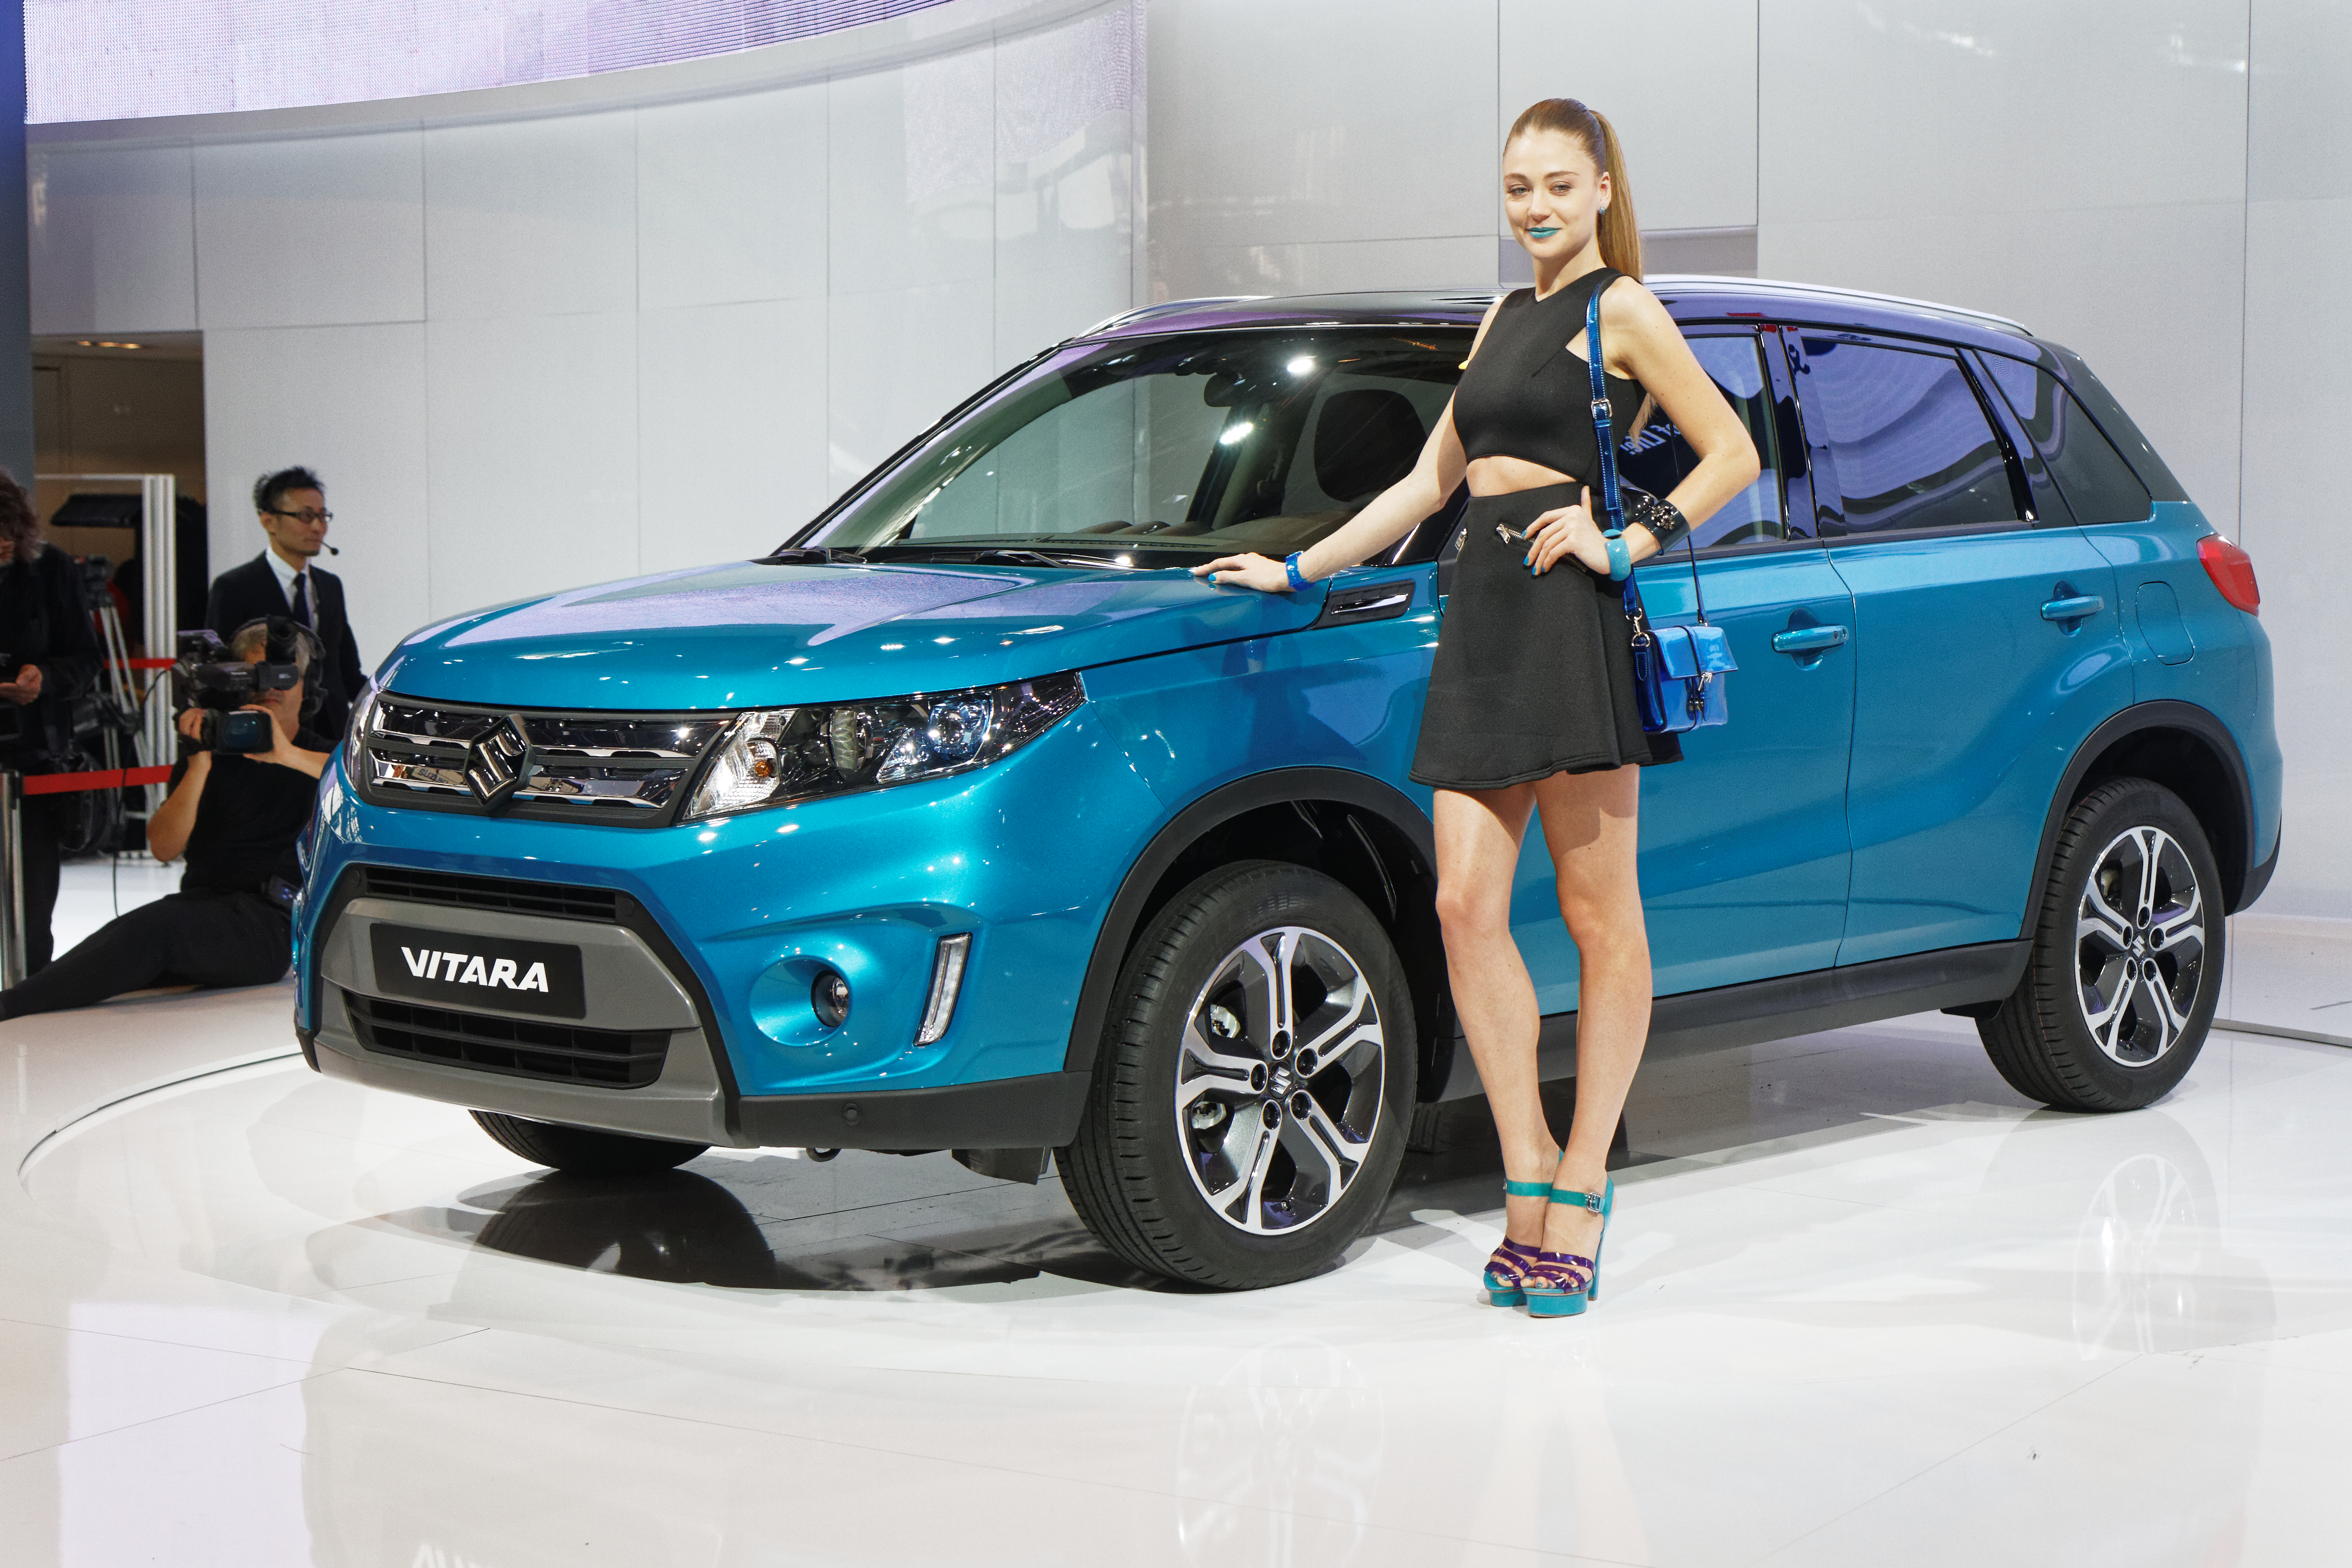 Suzuki Vitara accessories model